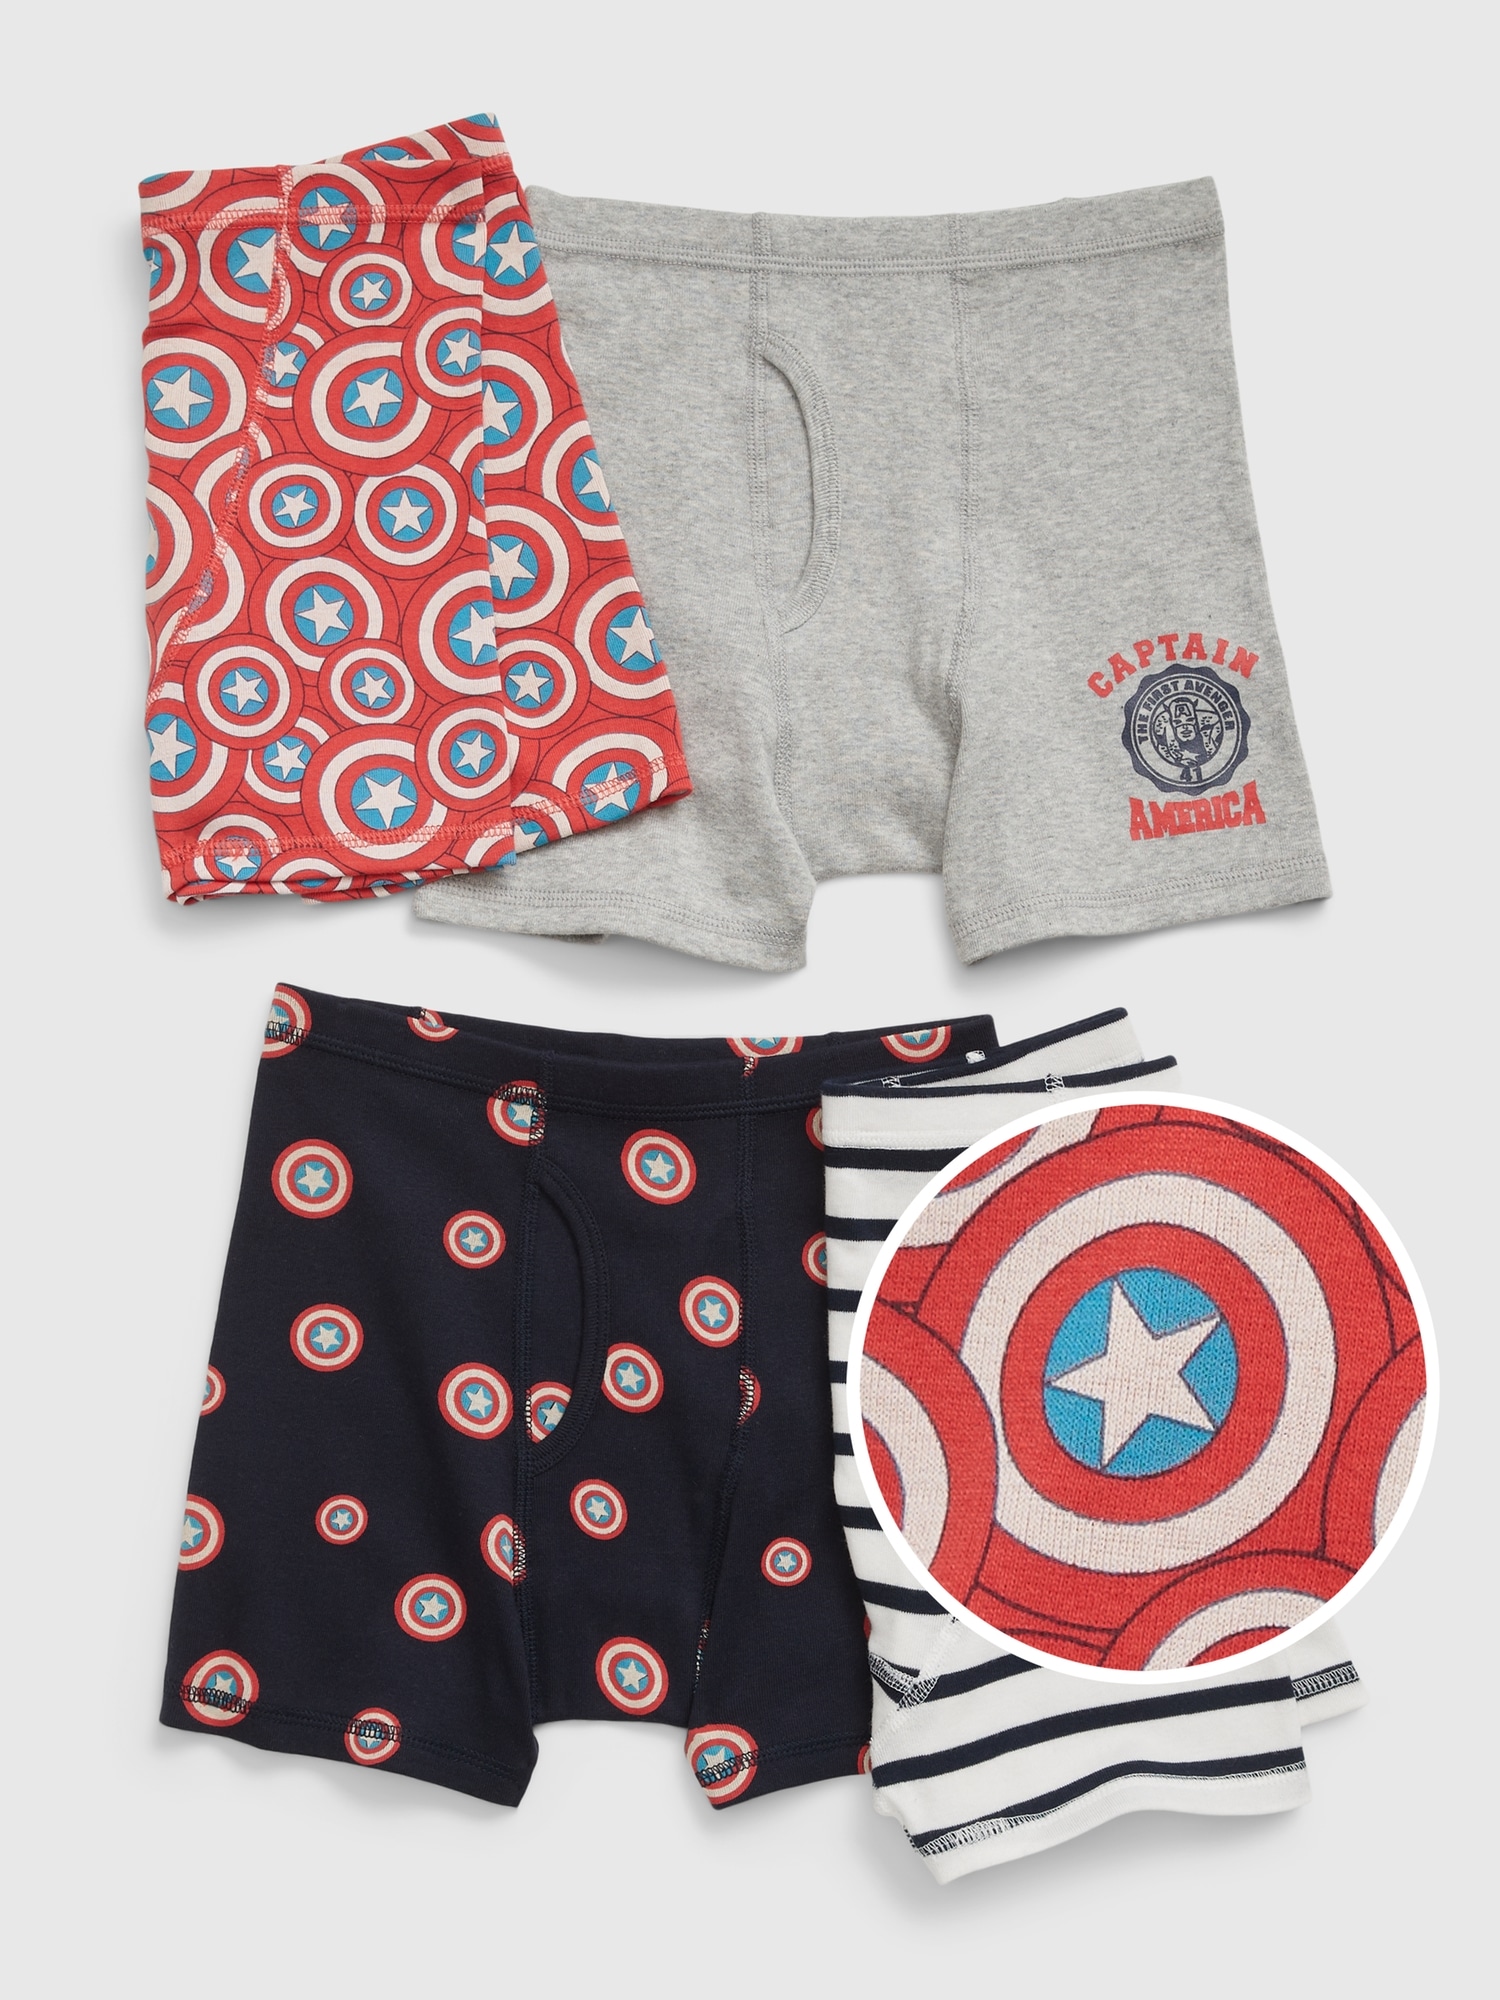 Marvel Spiderman Boys Pants 5 Pack Cotton Briefs Underwear for